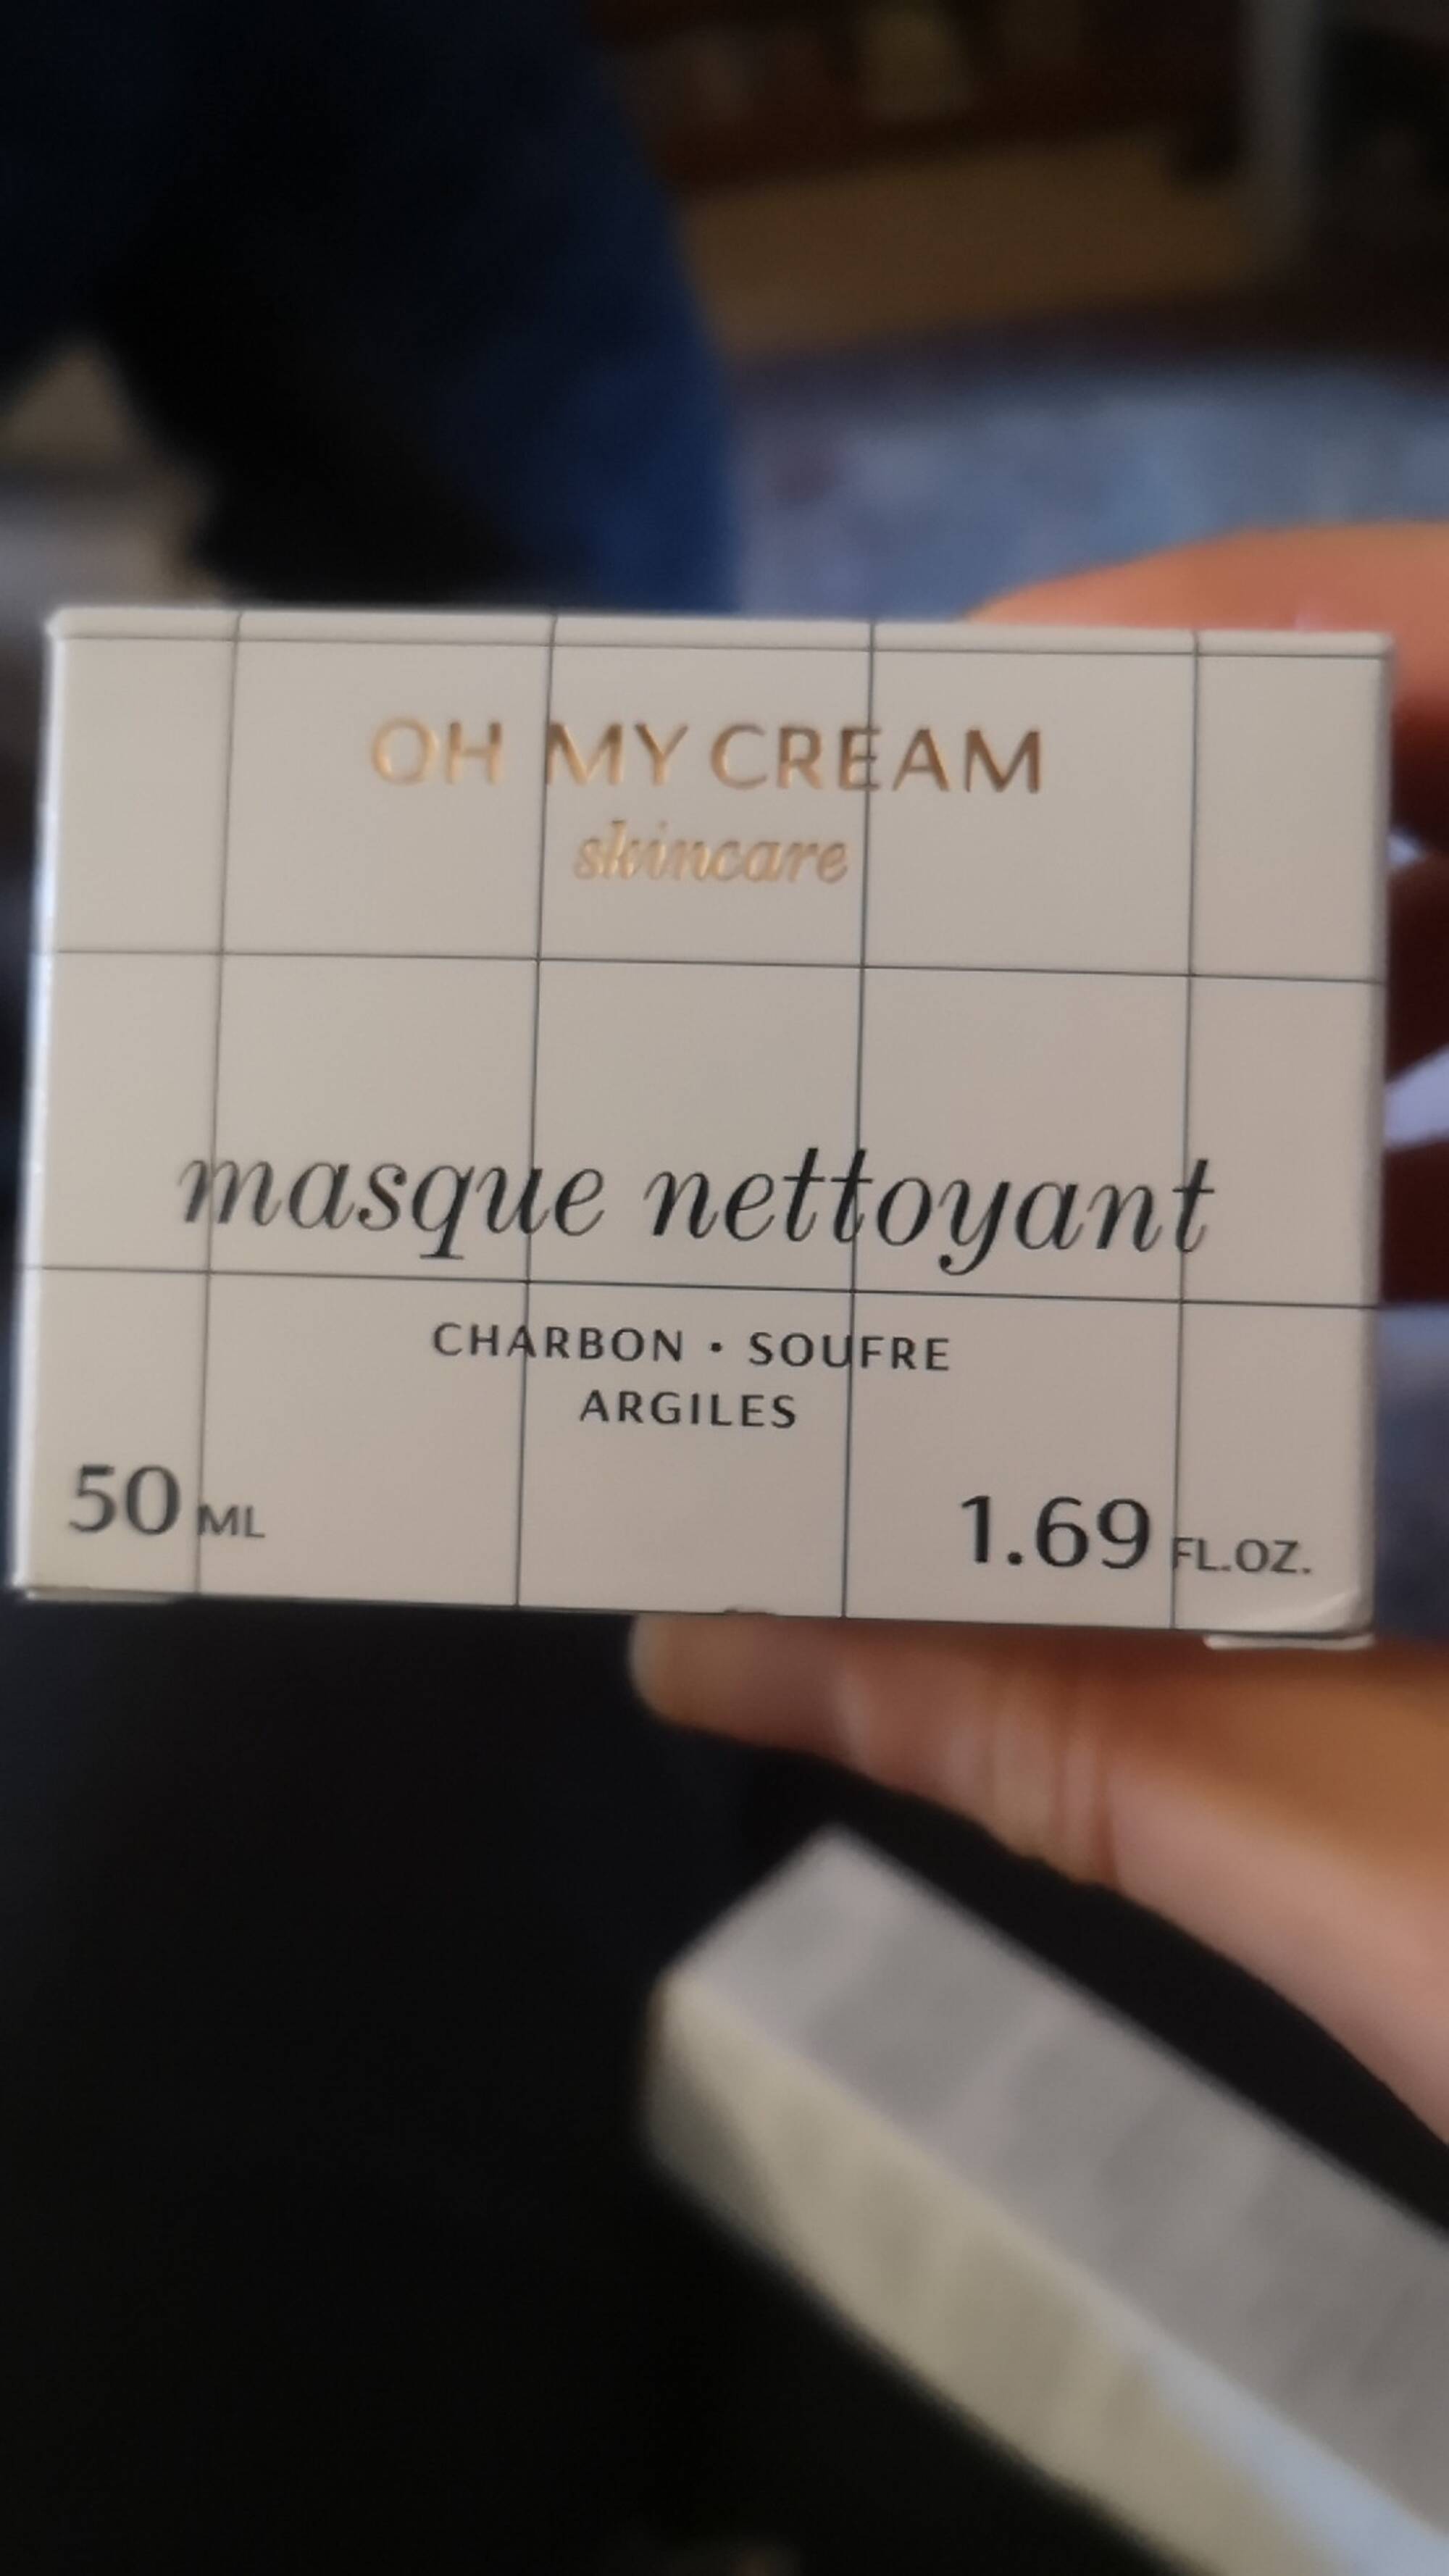 OH MY CREAM - Masque nettoyant 